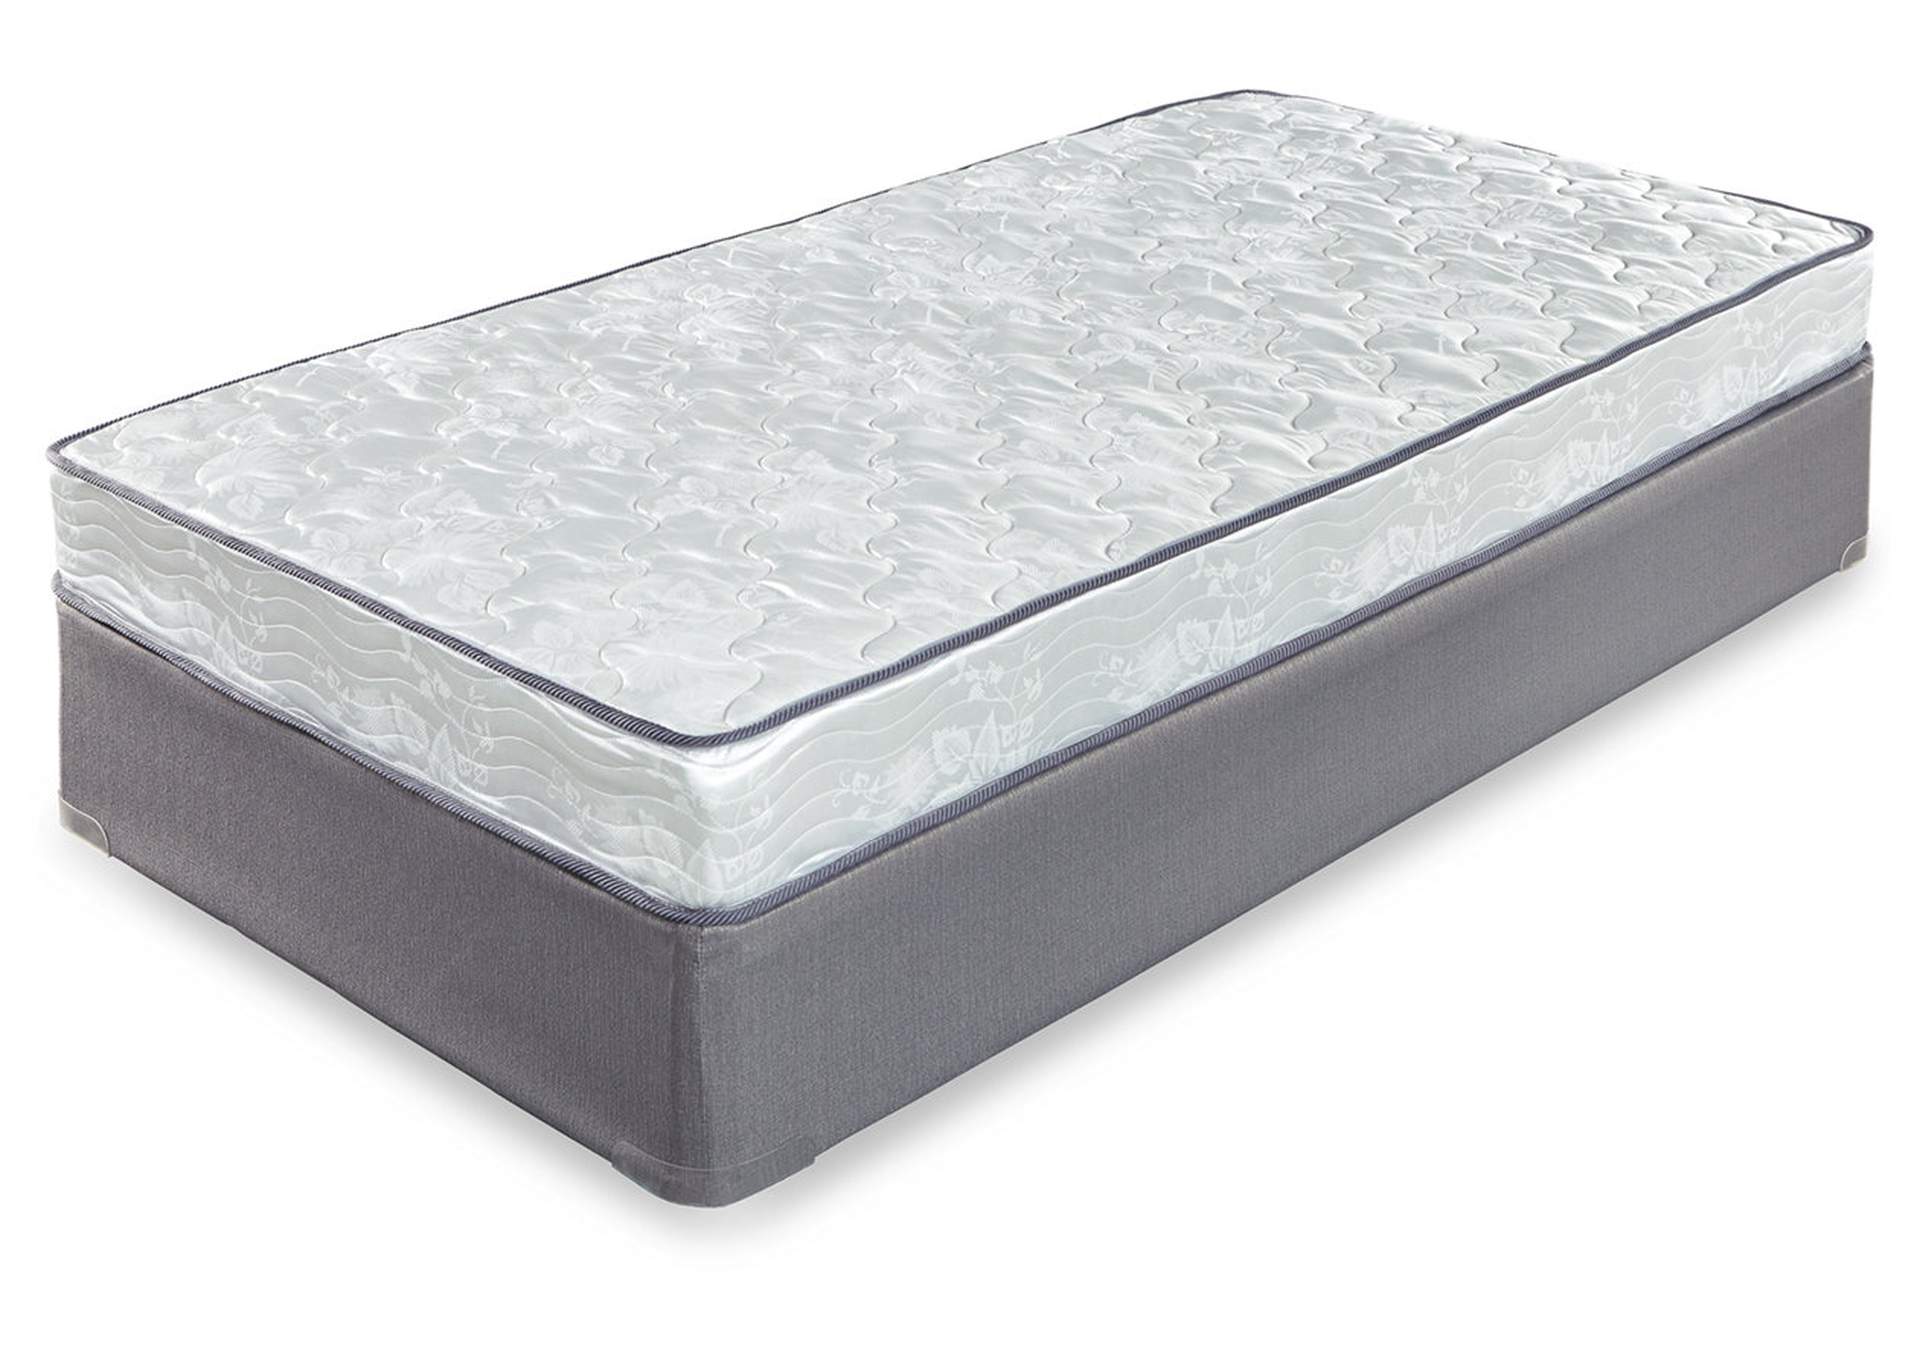 discounted 6 inch full mattress